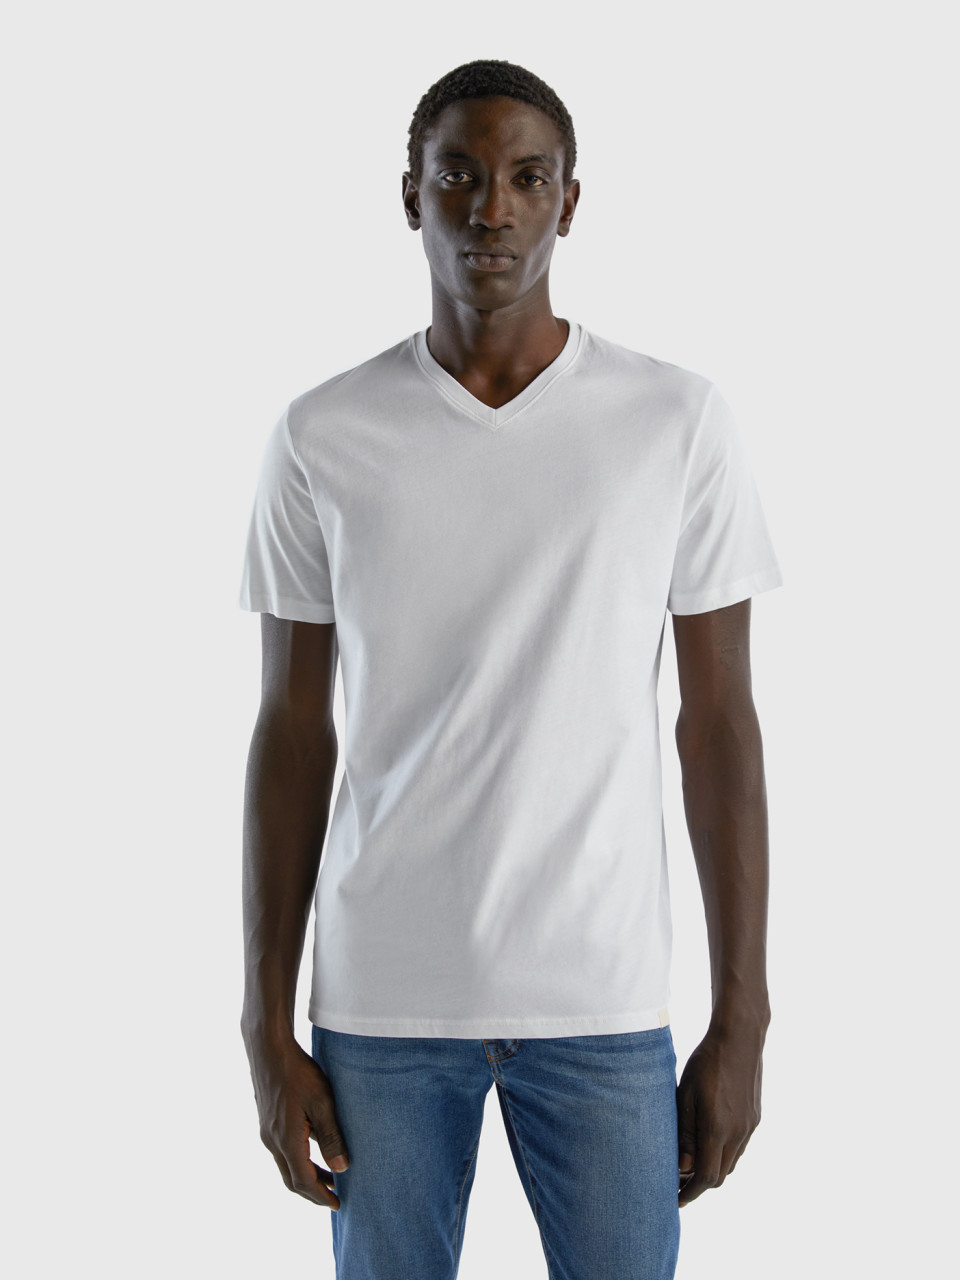 Benetton, T-shirt In Cotone A Fibra Lunga, Bianco, Uomo